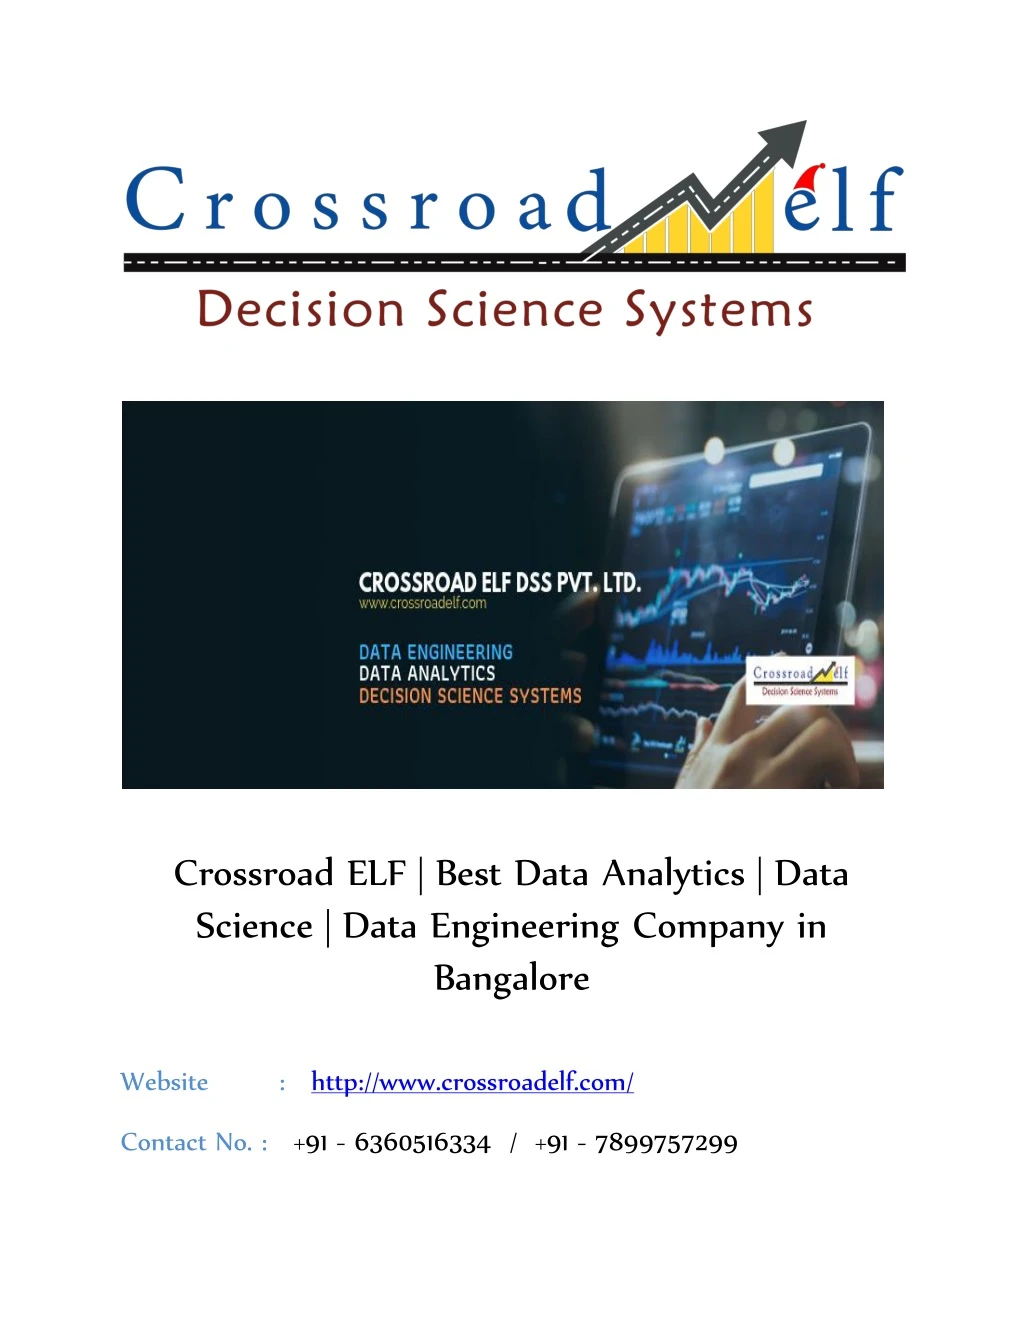 crossroad elf best data analytics data science